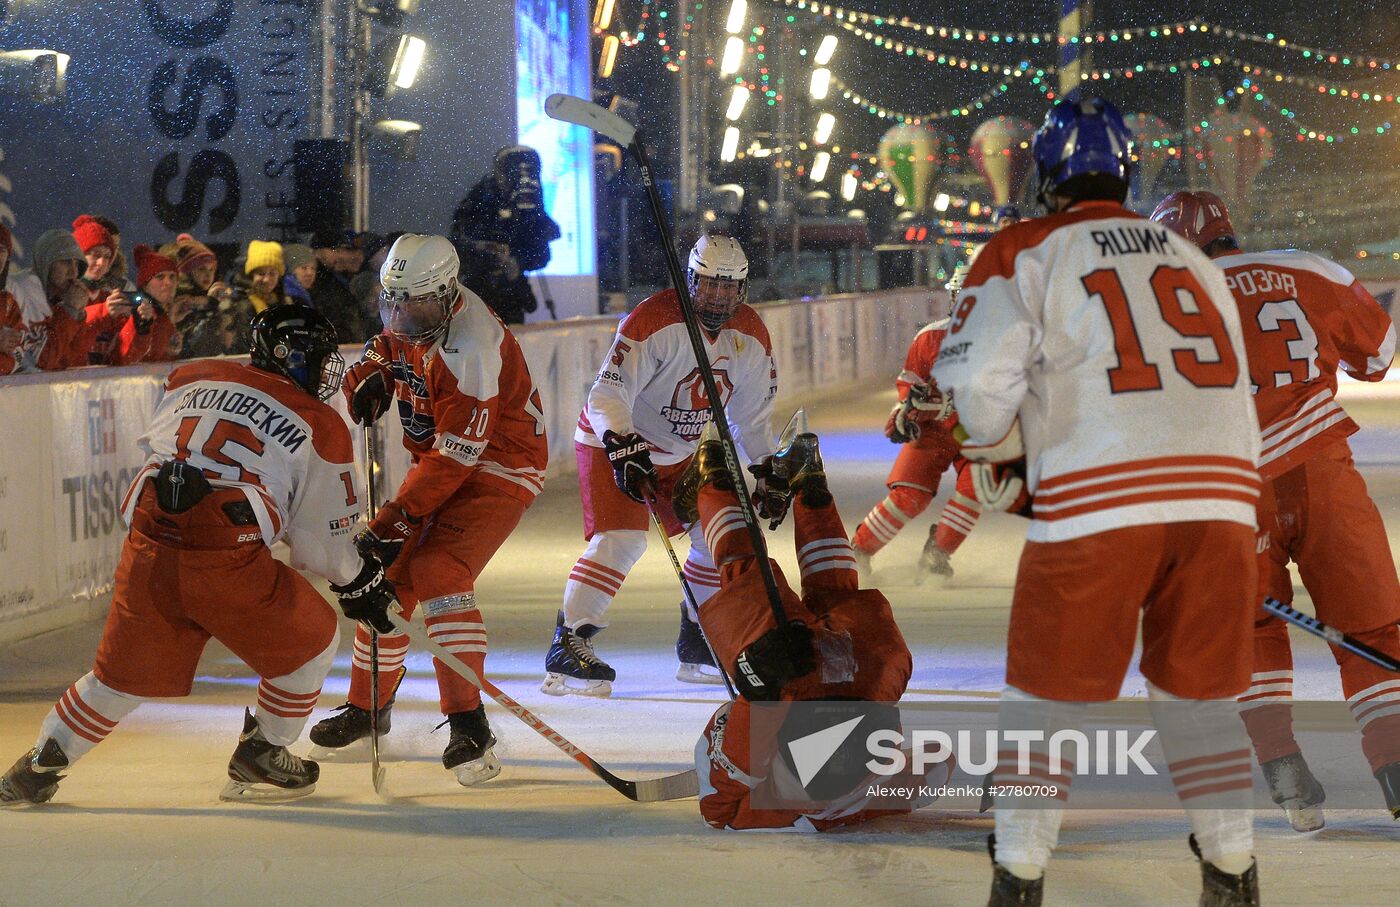 100-day countdown to 2016 IIHF Ice Hockey World Championship in Russia